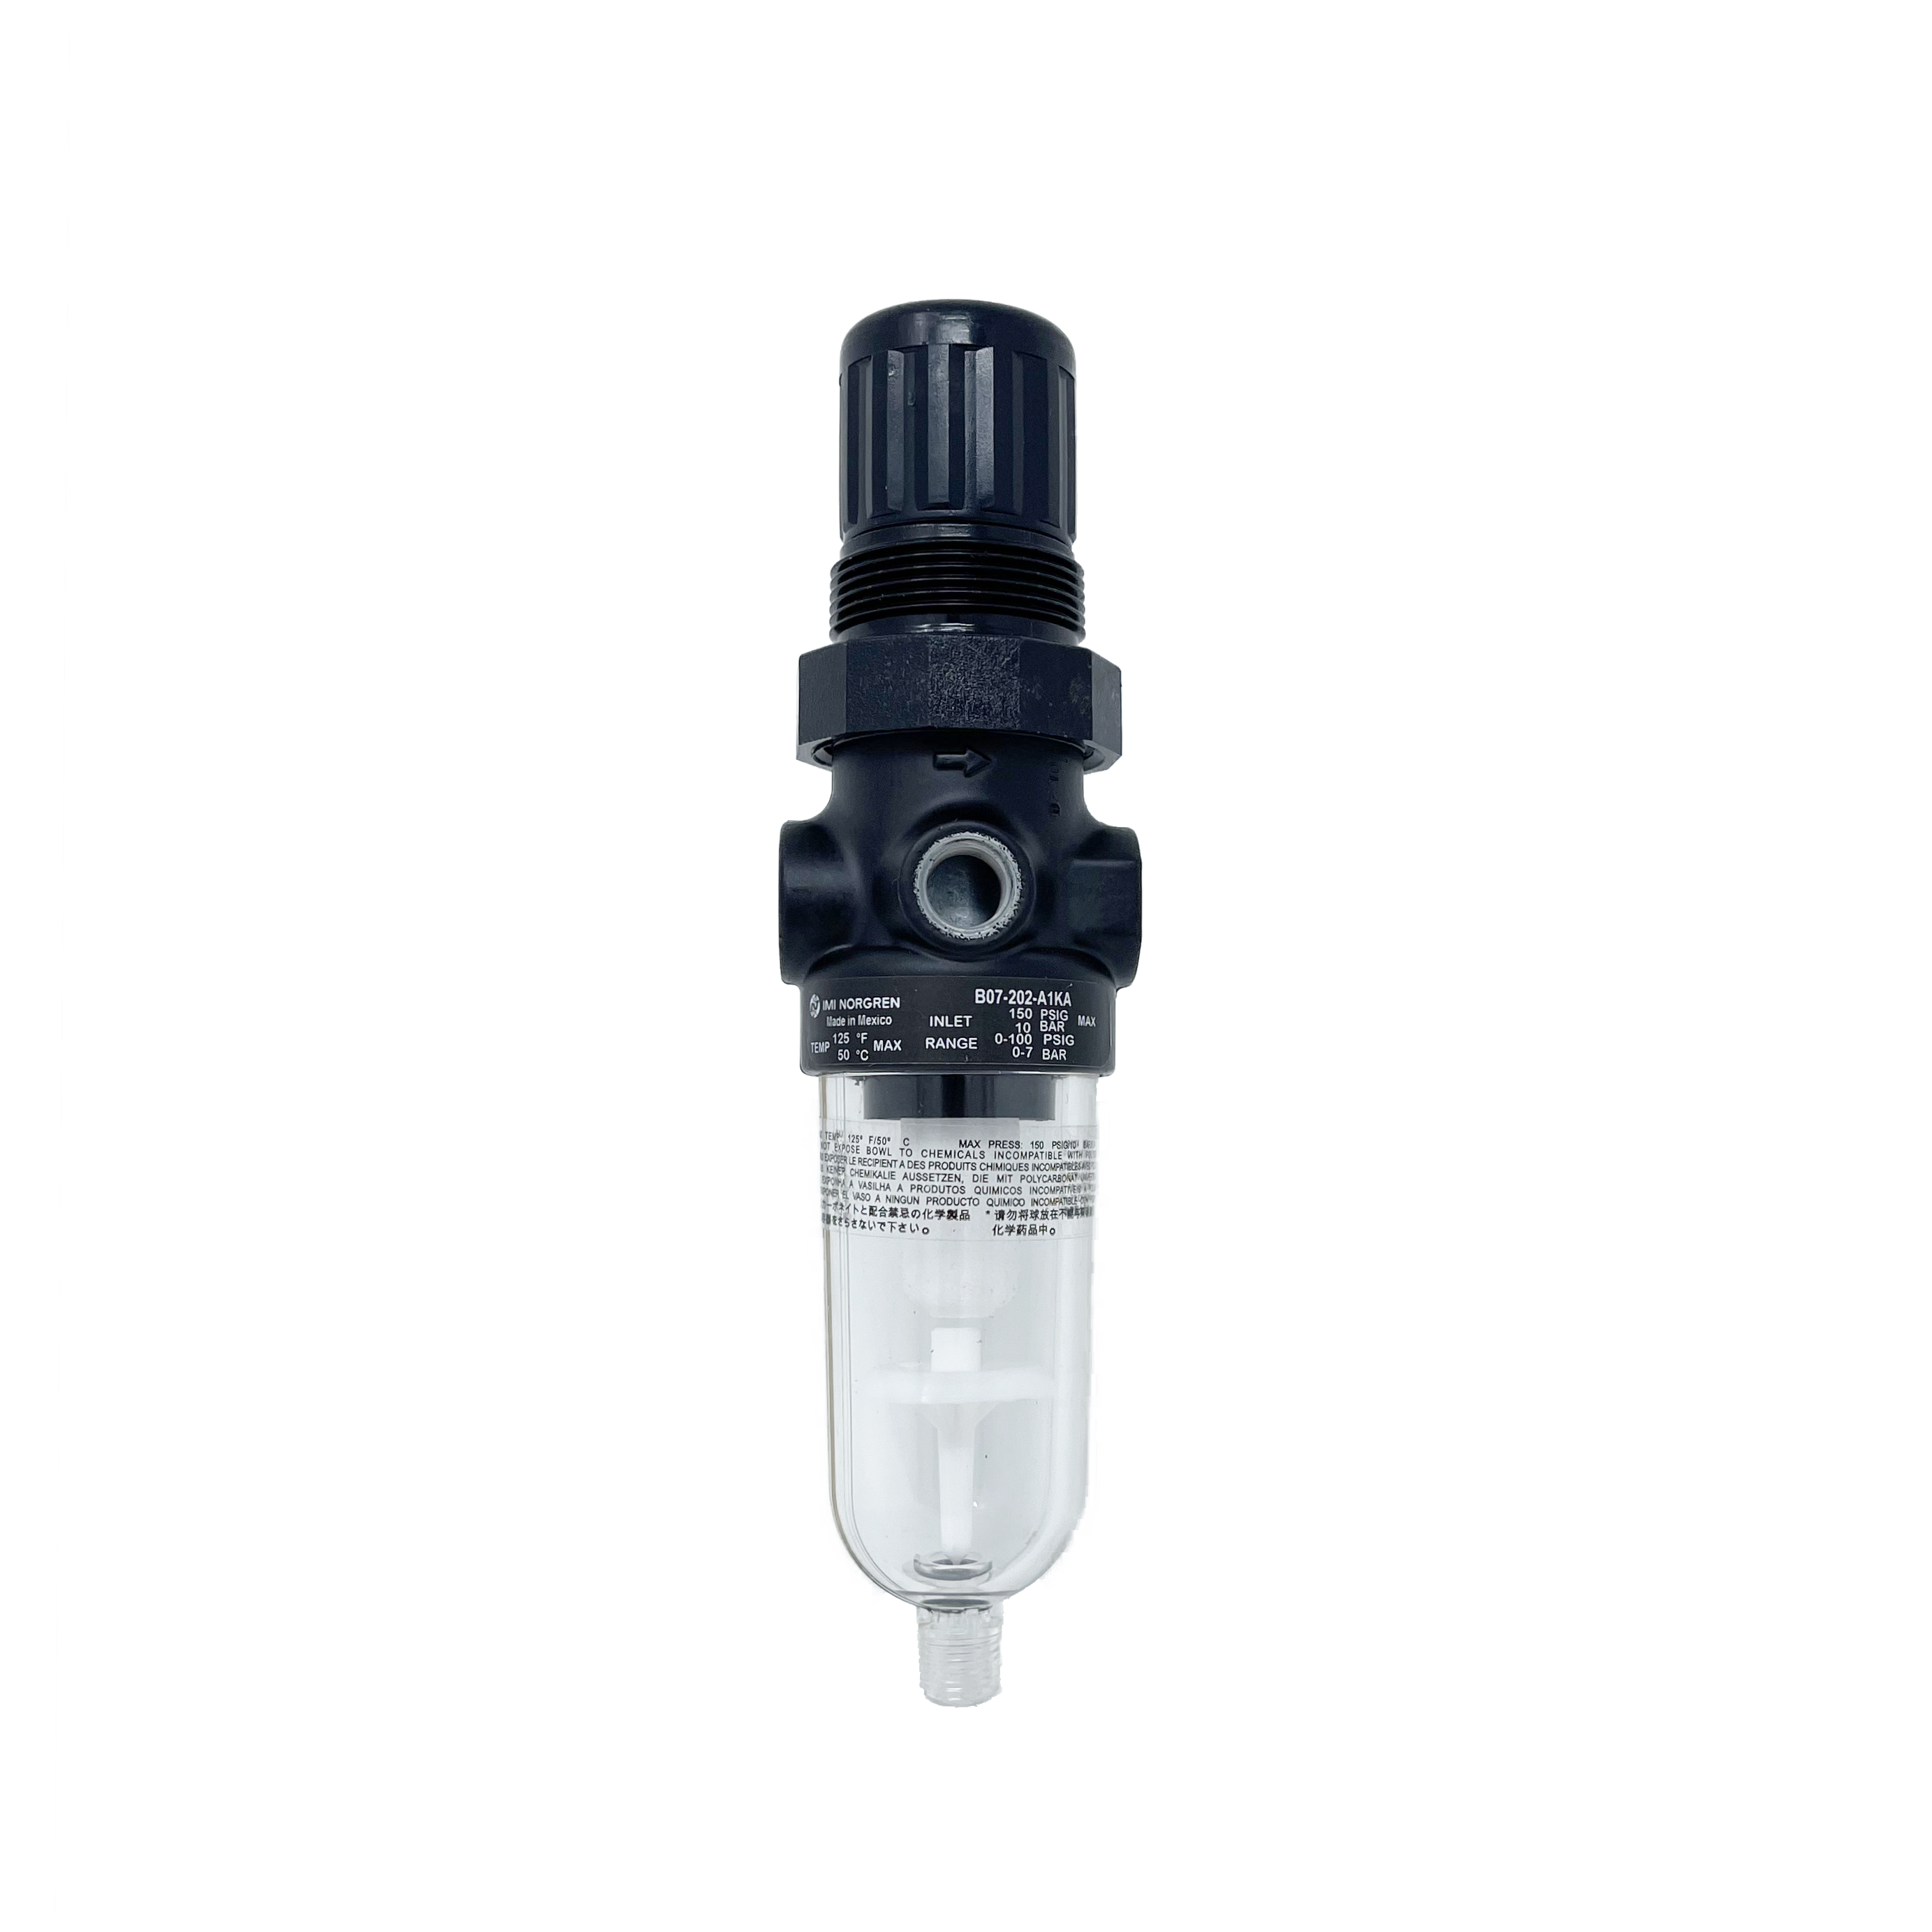 B07-201-A3KA : Norgren B07 miniature filter/regulator, Transparent Bowl, Relieving, Without Gauge, Automatic Drain, 40-Micron, 5